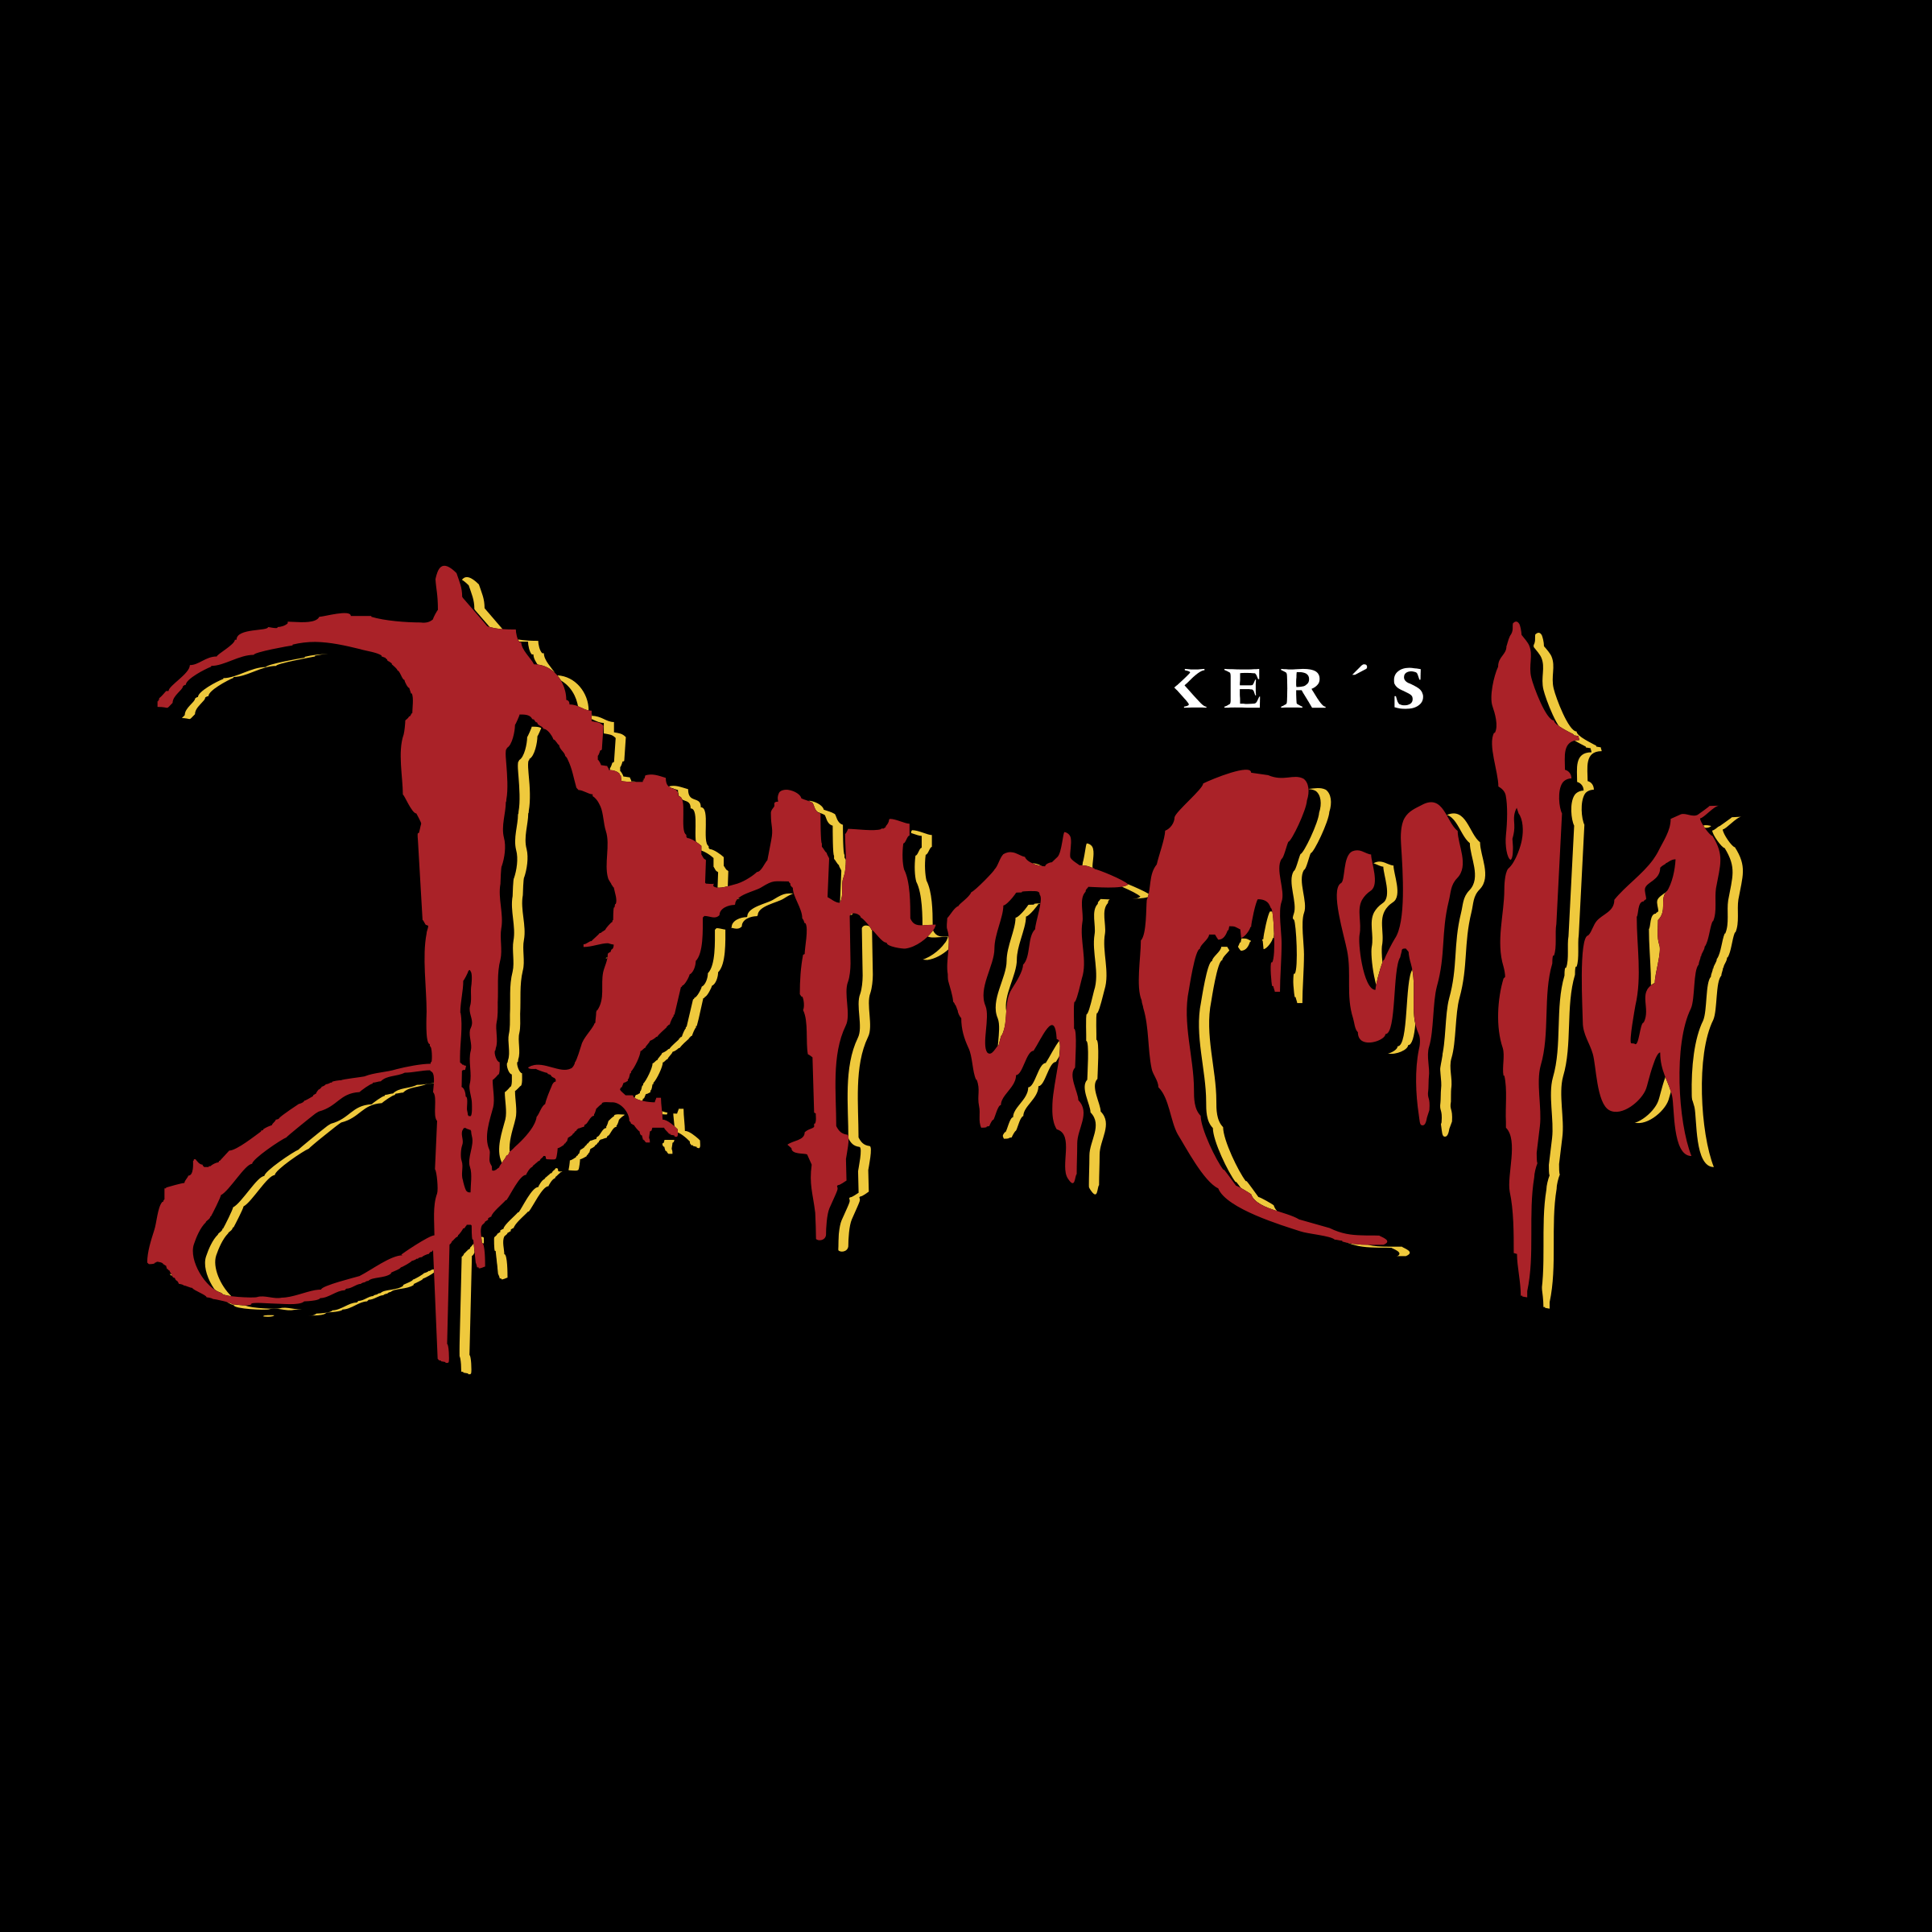 Dracula Logo - Dracula Logo PNG Transparent & SVG Vector - Freebie Supply